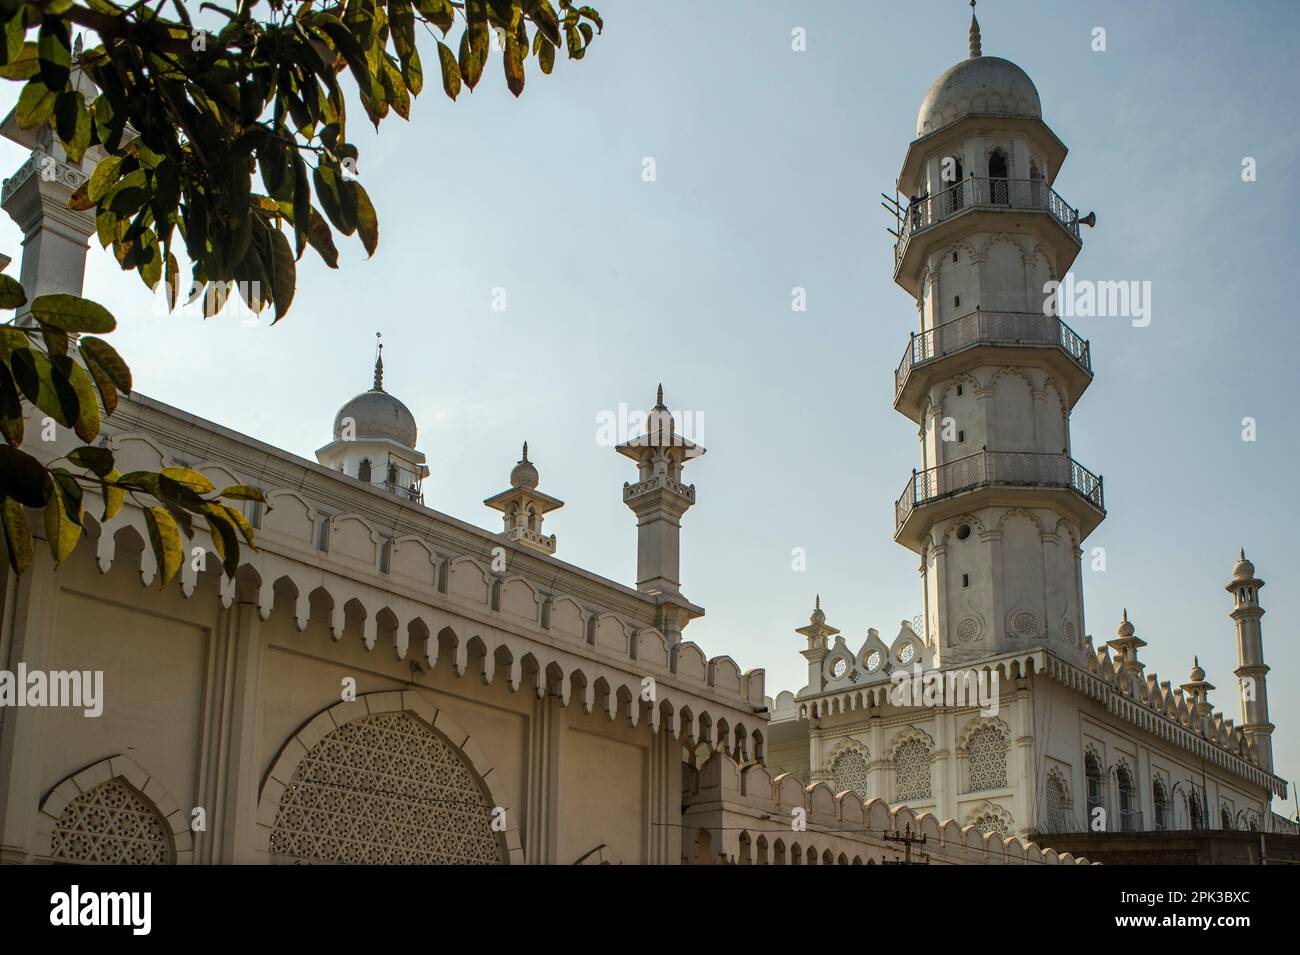 12 27 2014 heritage architecture-Sakchi Masjid - Jamshedpur Jharkhand INDIA Stock Photo